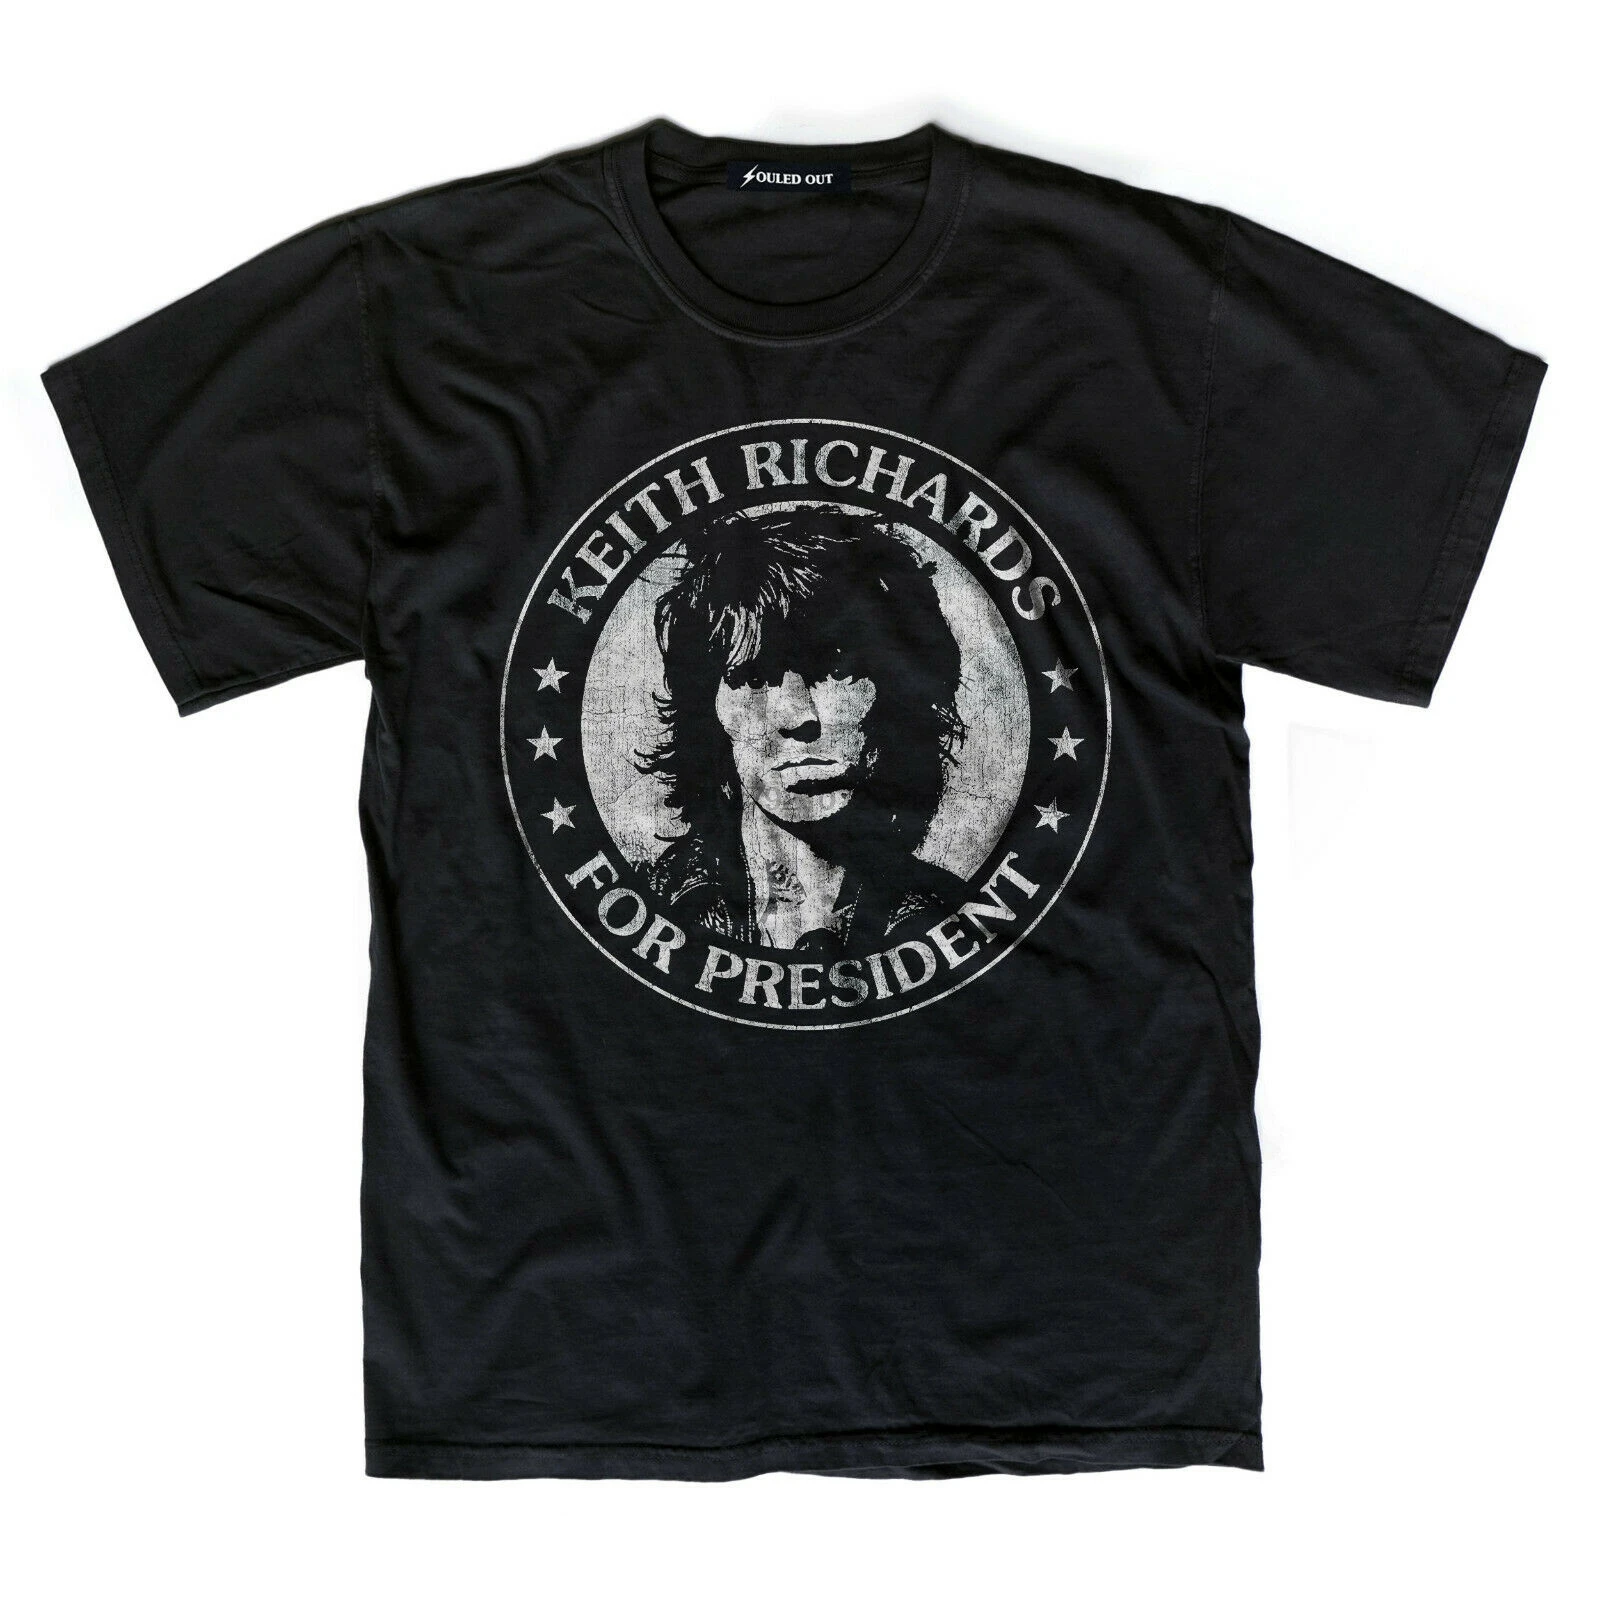 

Keith Richards For President T-Shirt